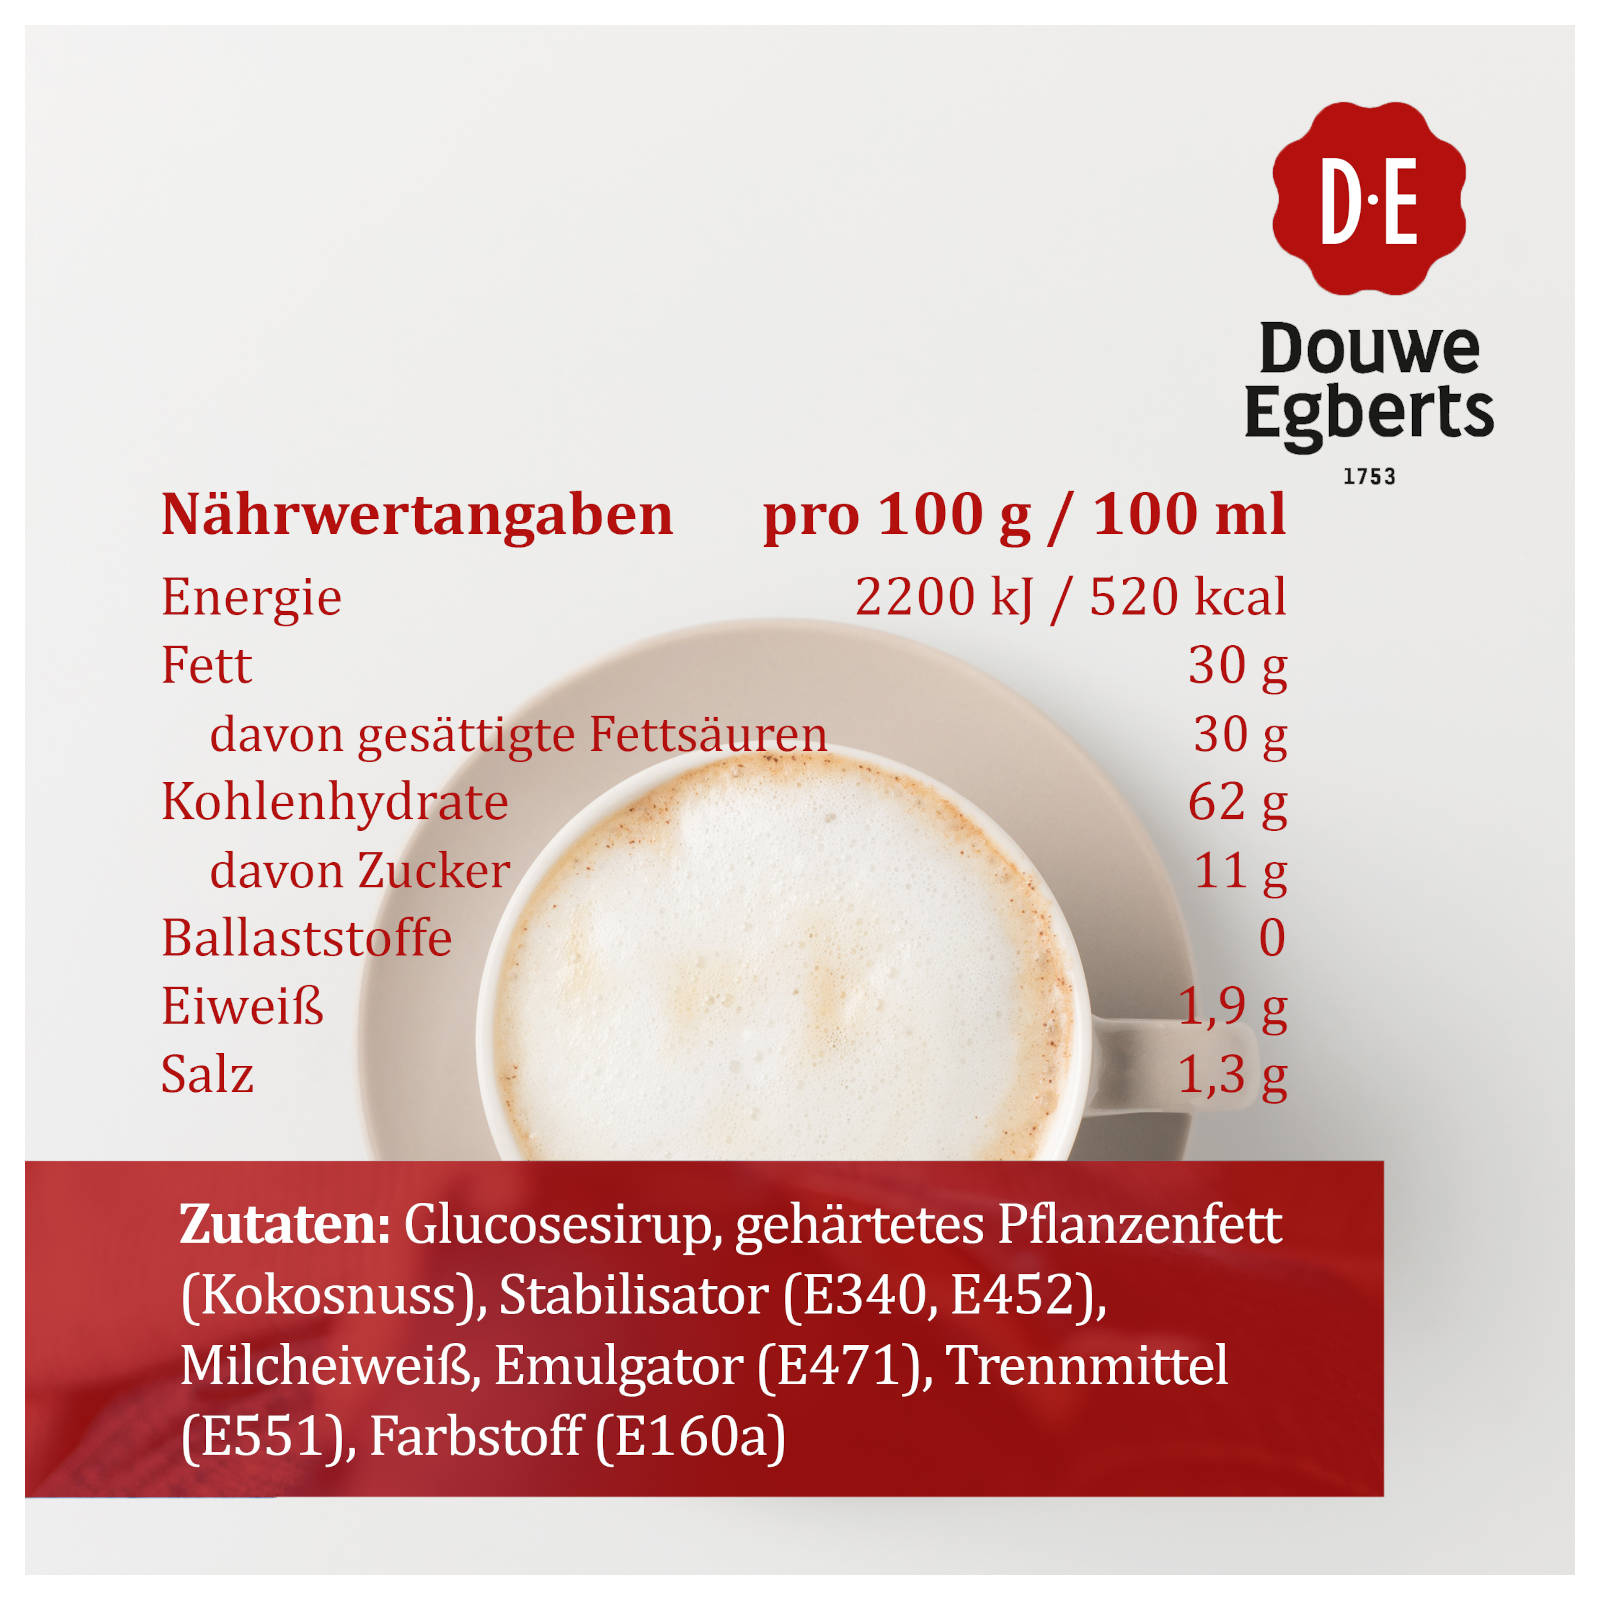 Creamer EGBERTS 900 Kaffeeweißer DOUWE JACOBS Sticks